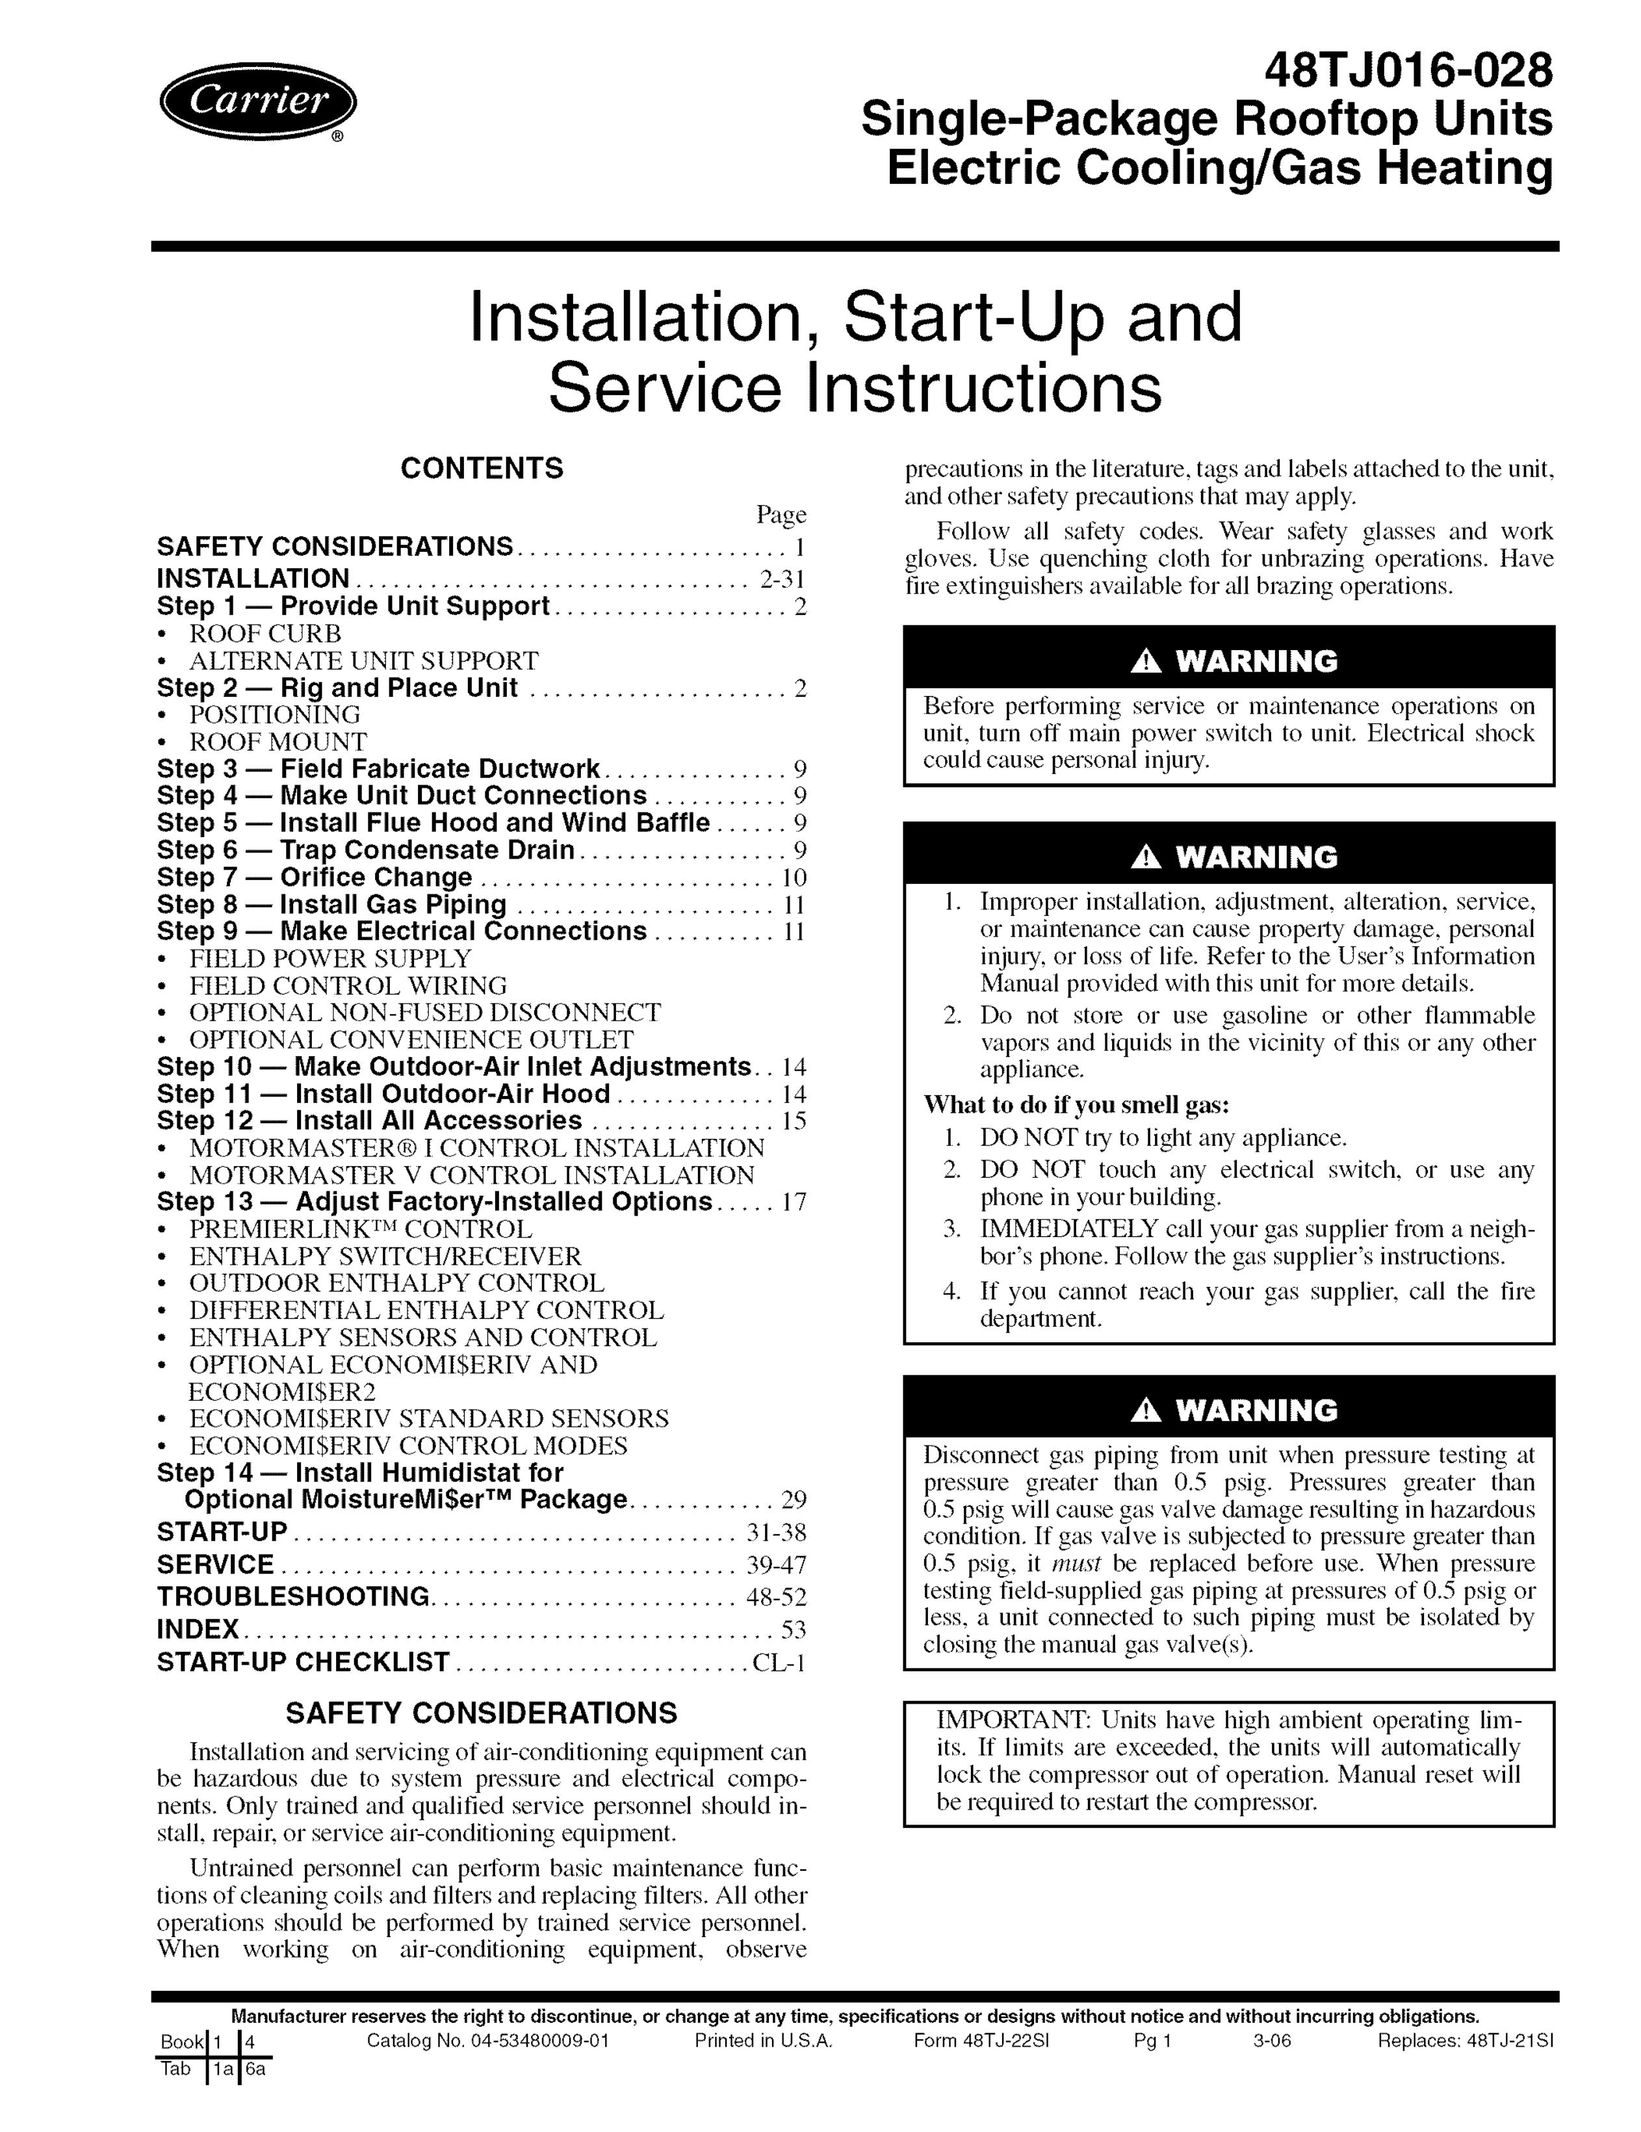 Carrier 48TJ016-028 Gas Heater User Manual